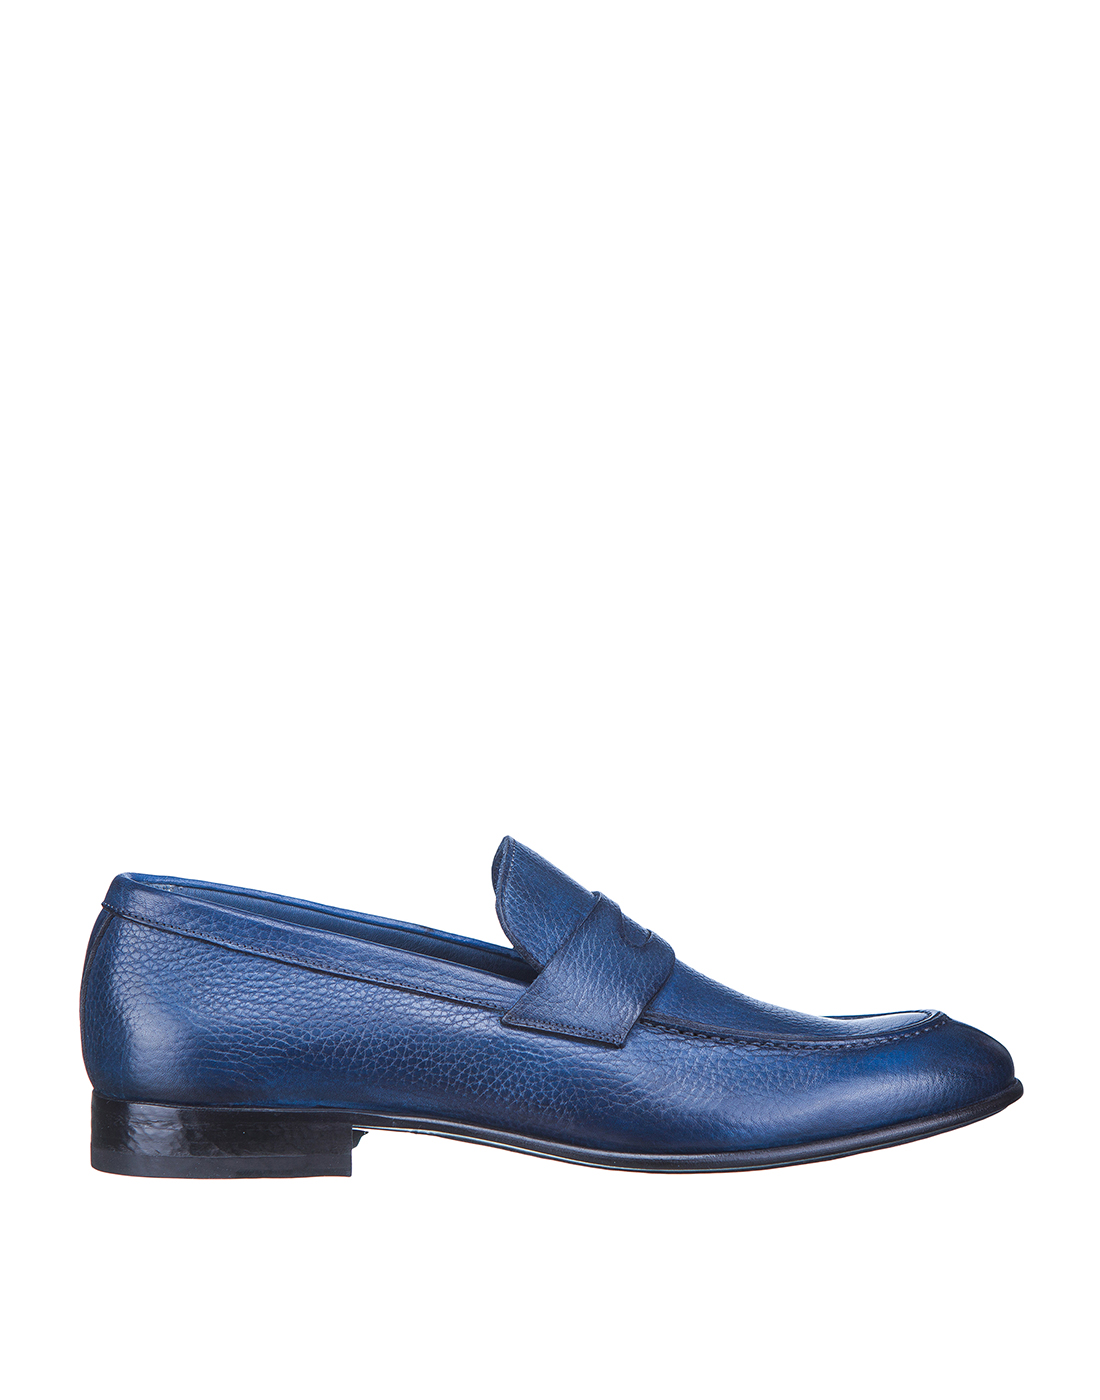 Туфли синие мужские  Brecos S7554-1